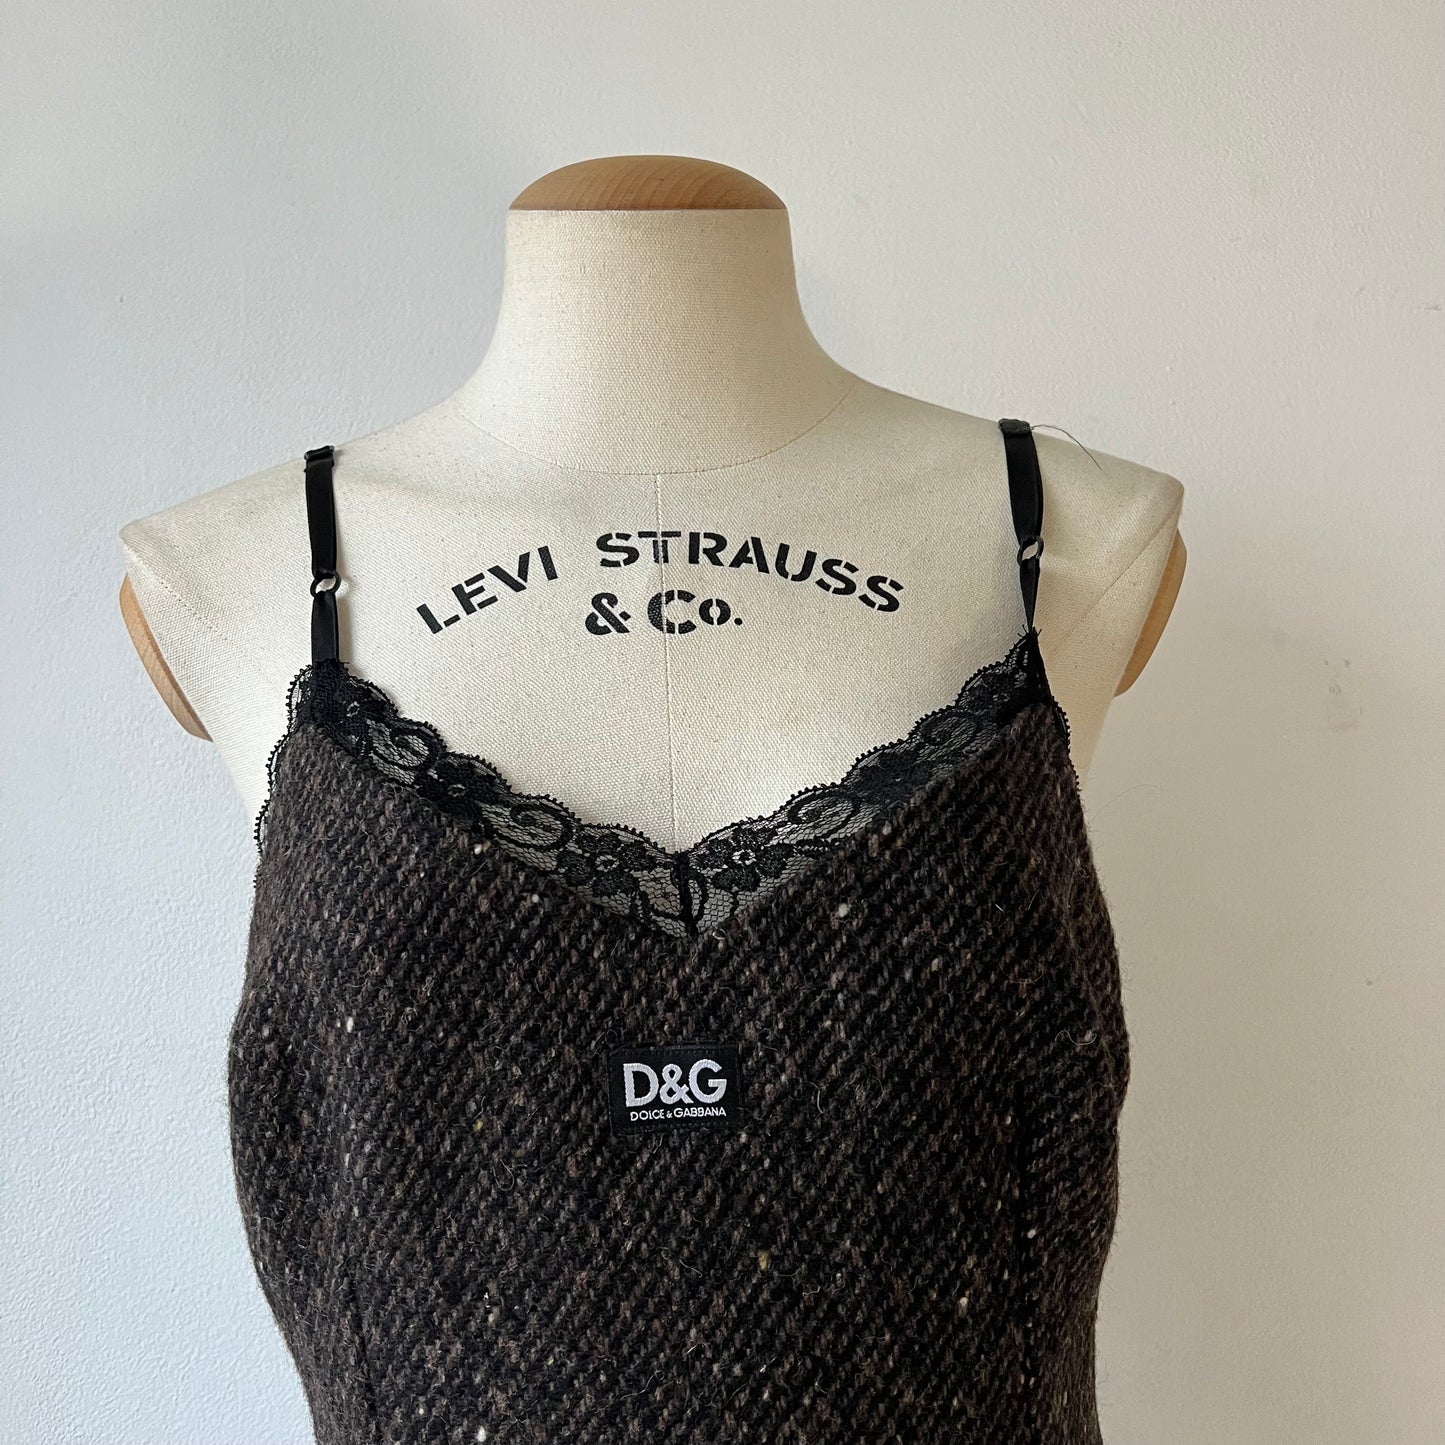 C 1995 D&G by Dolce & Gabbana wool dress